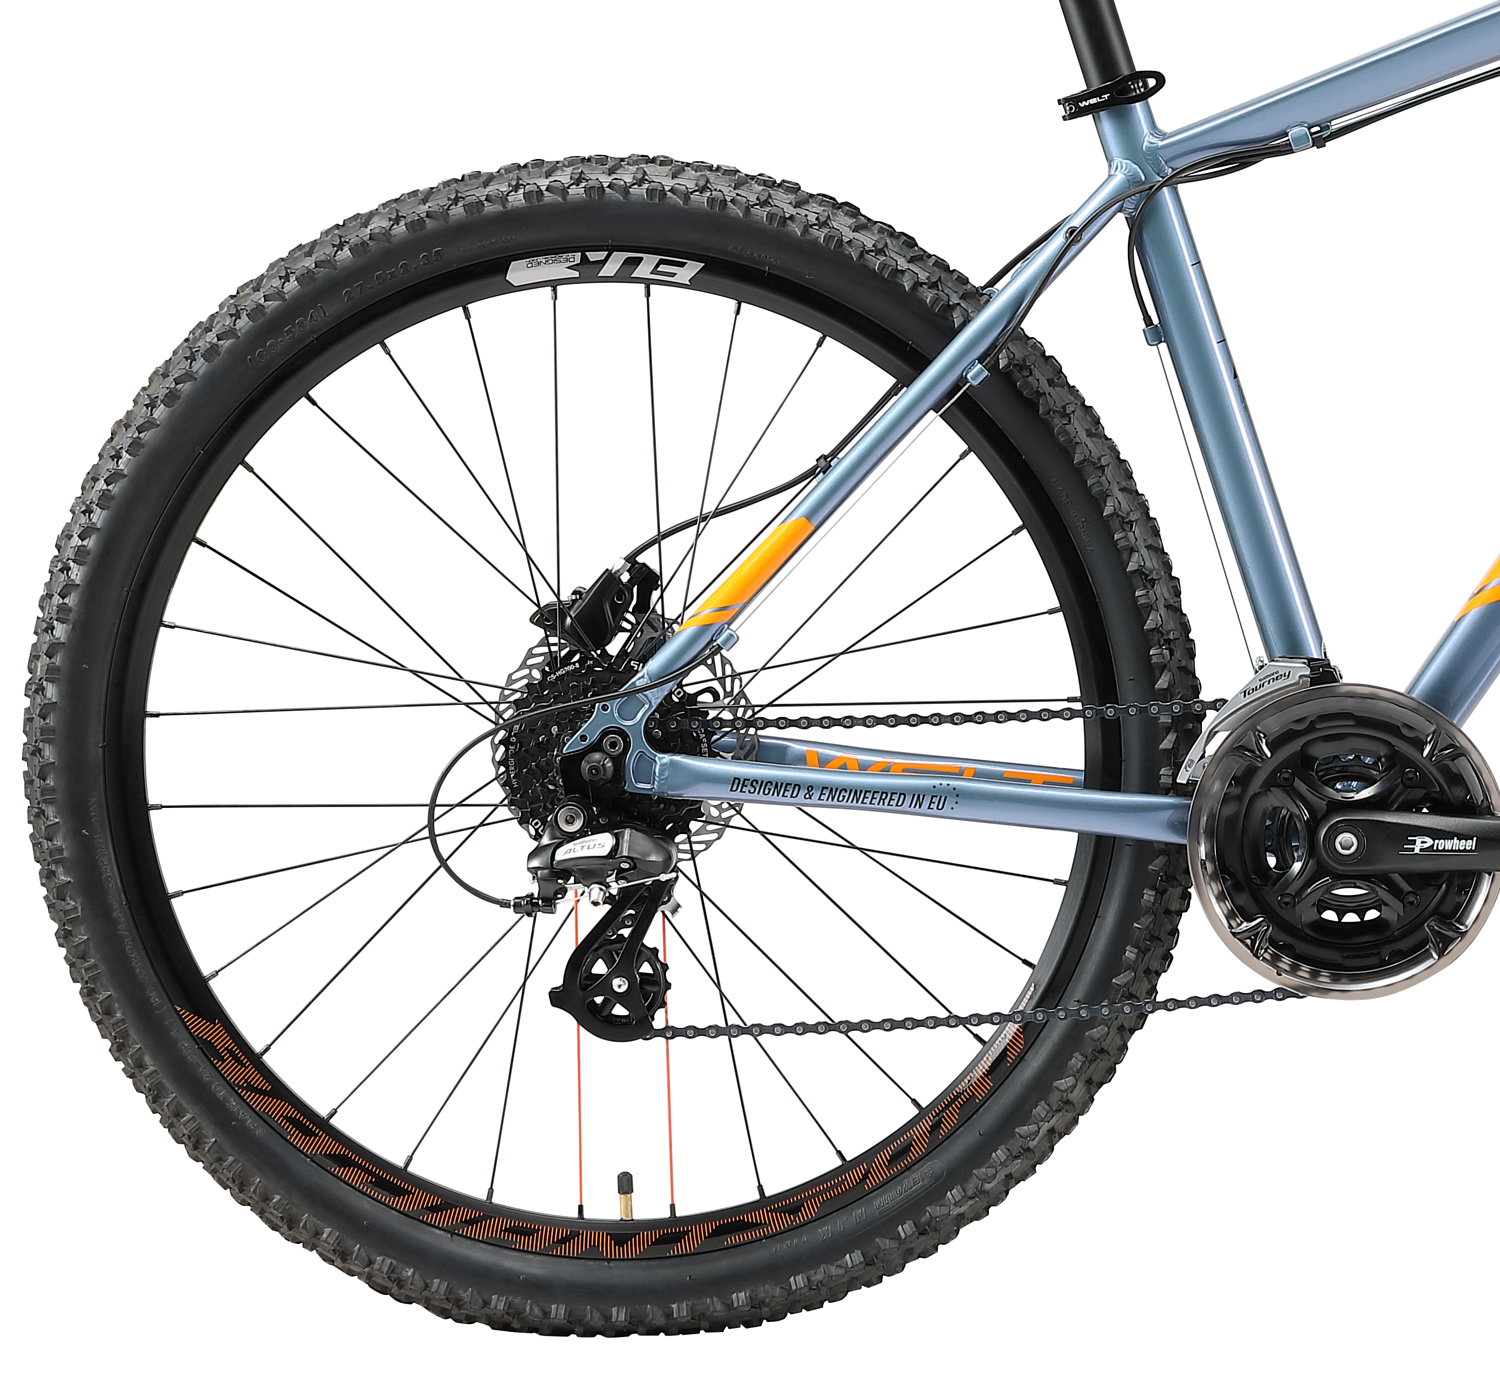 Велосипед Welt Ridge 2.0 HD 29 2021 Metal blue